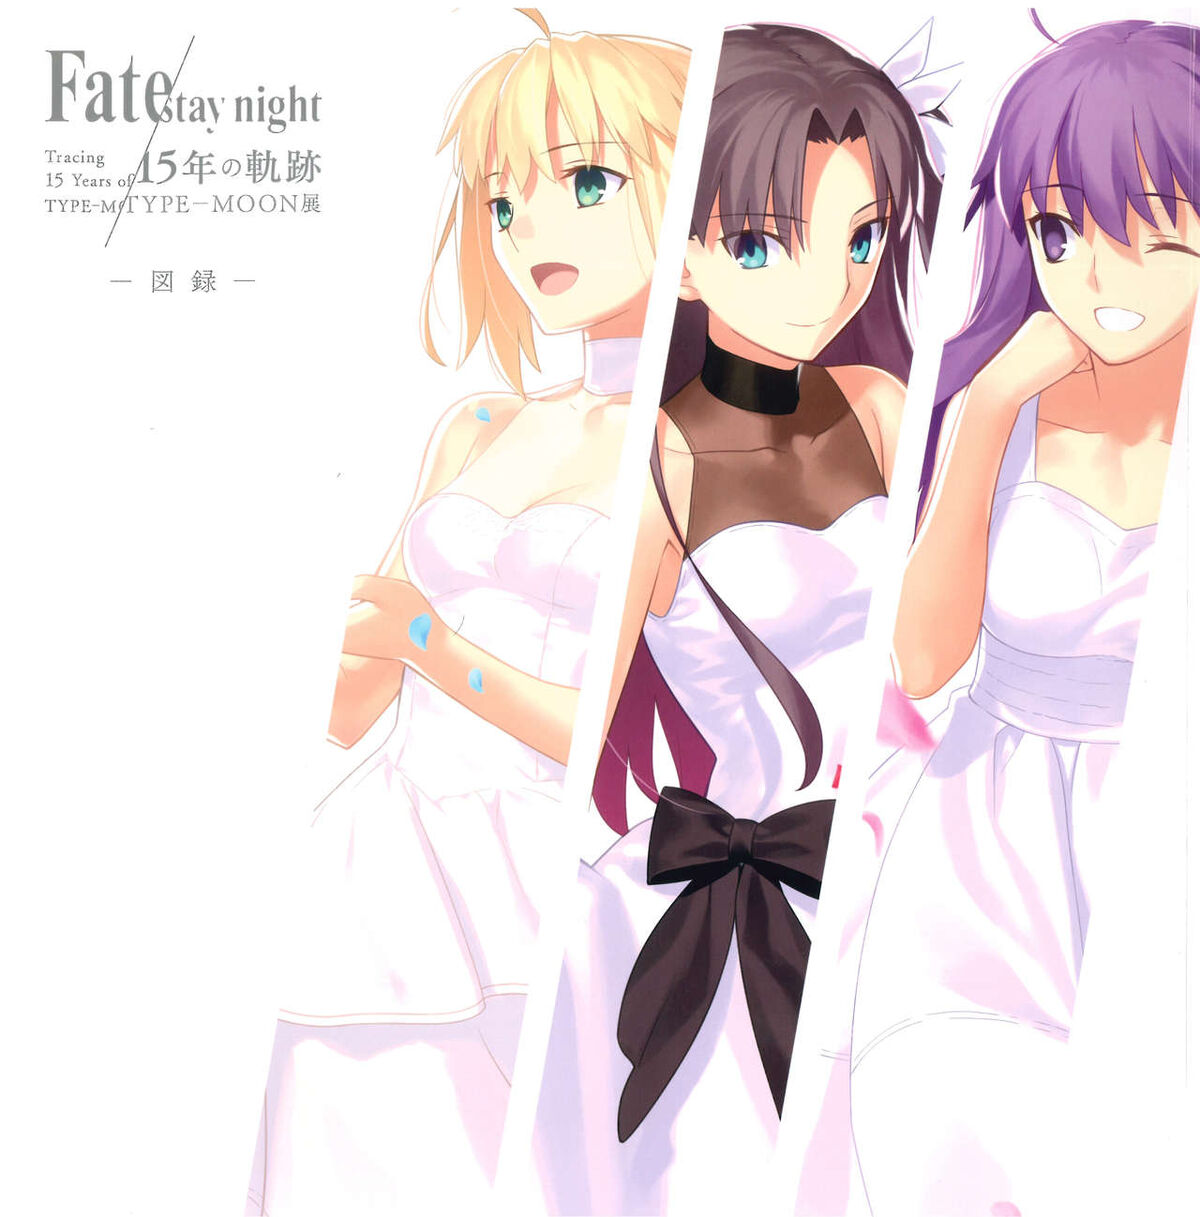 Fate/stay night (anime), TYPE-MOON Wiki